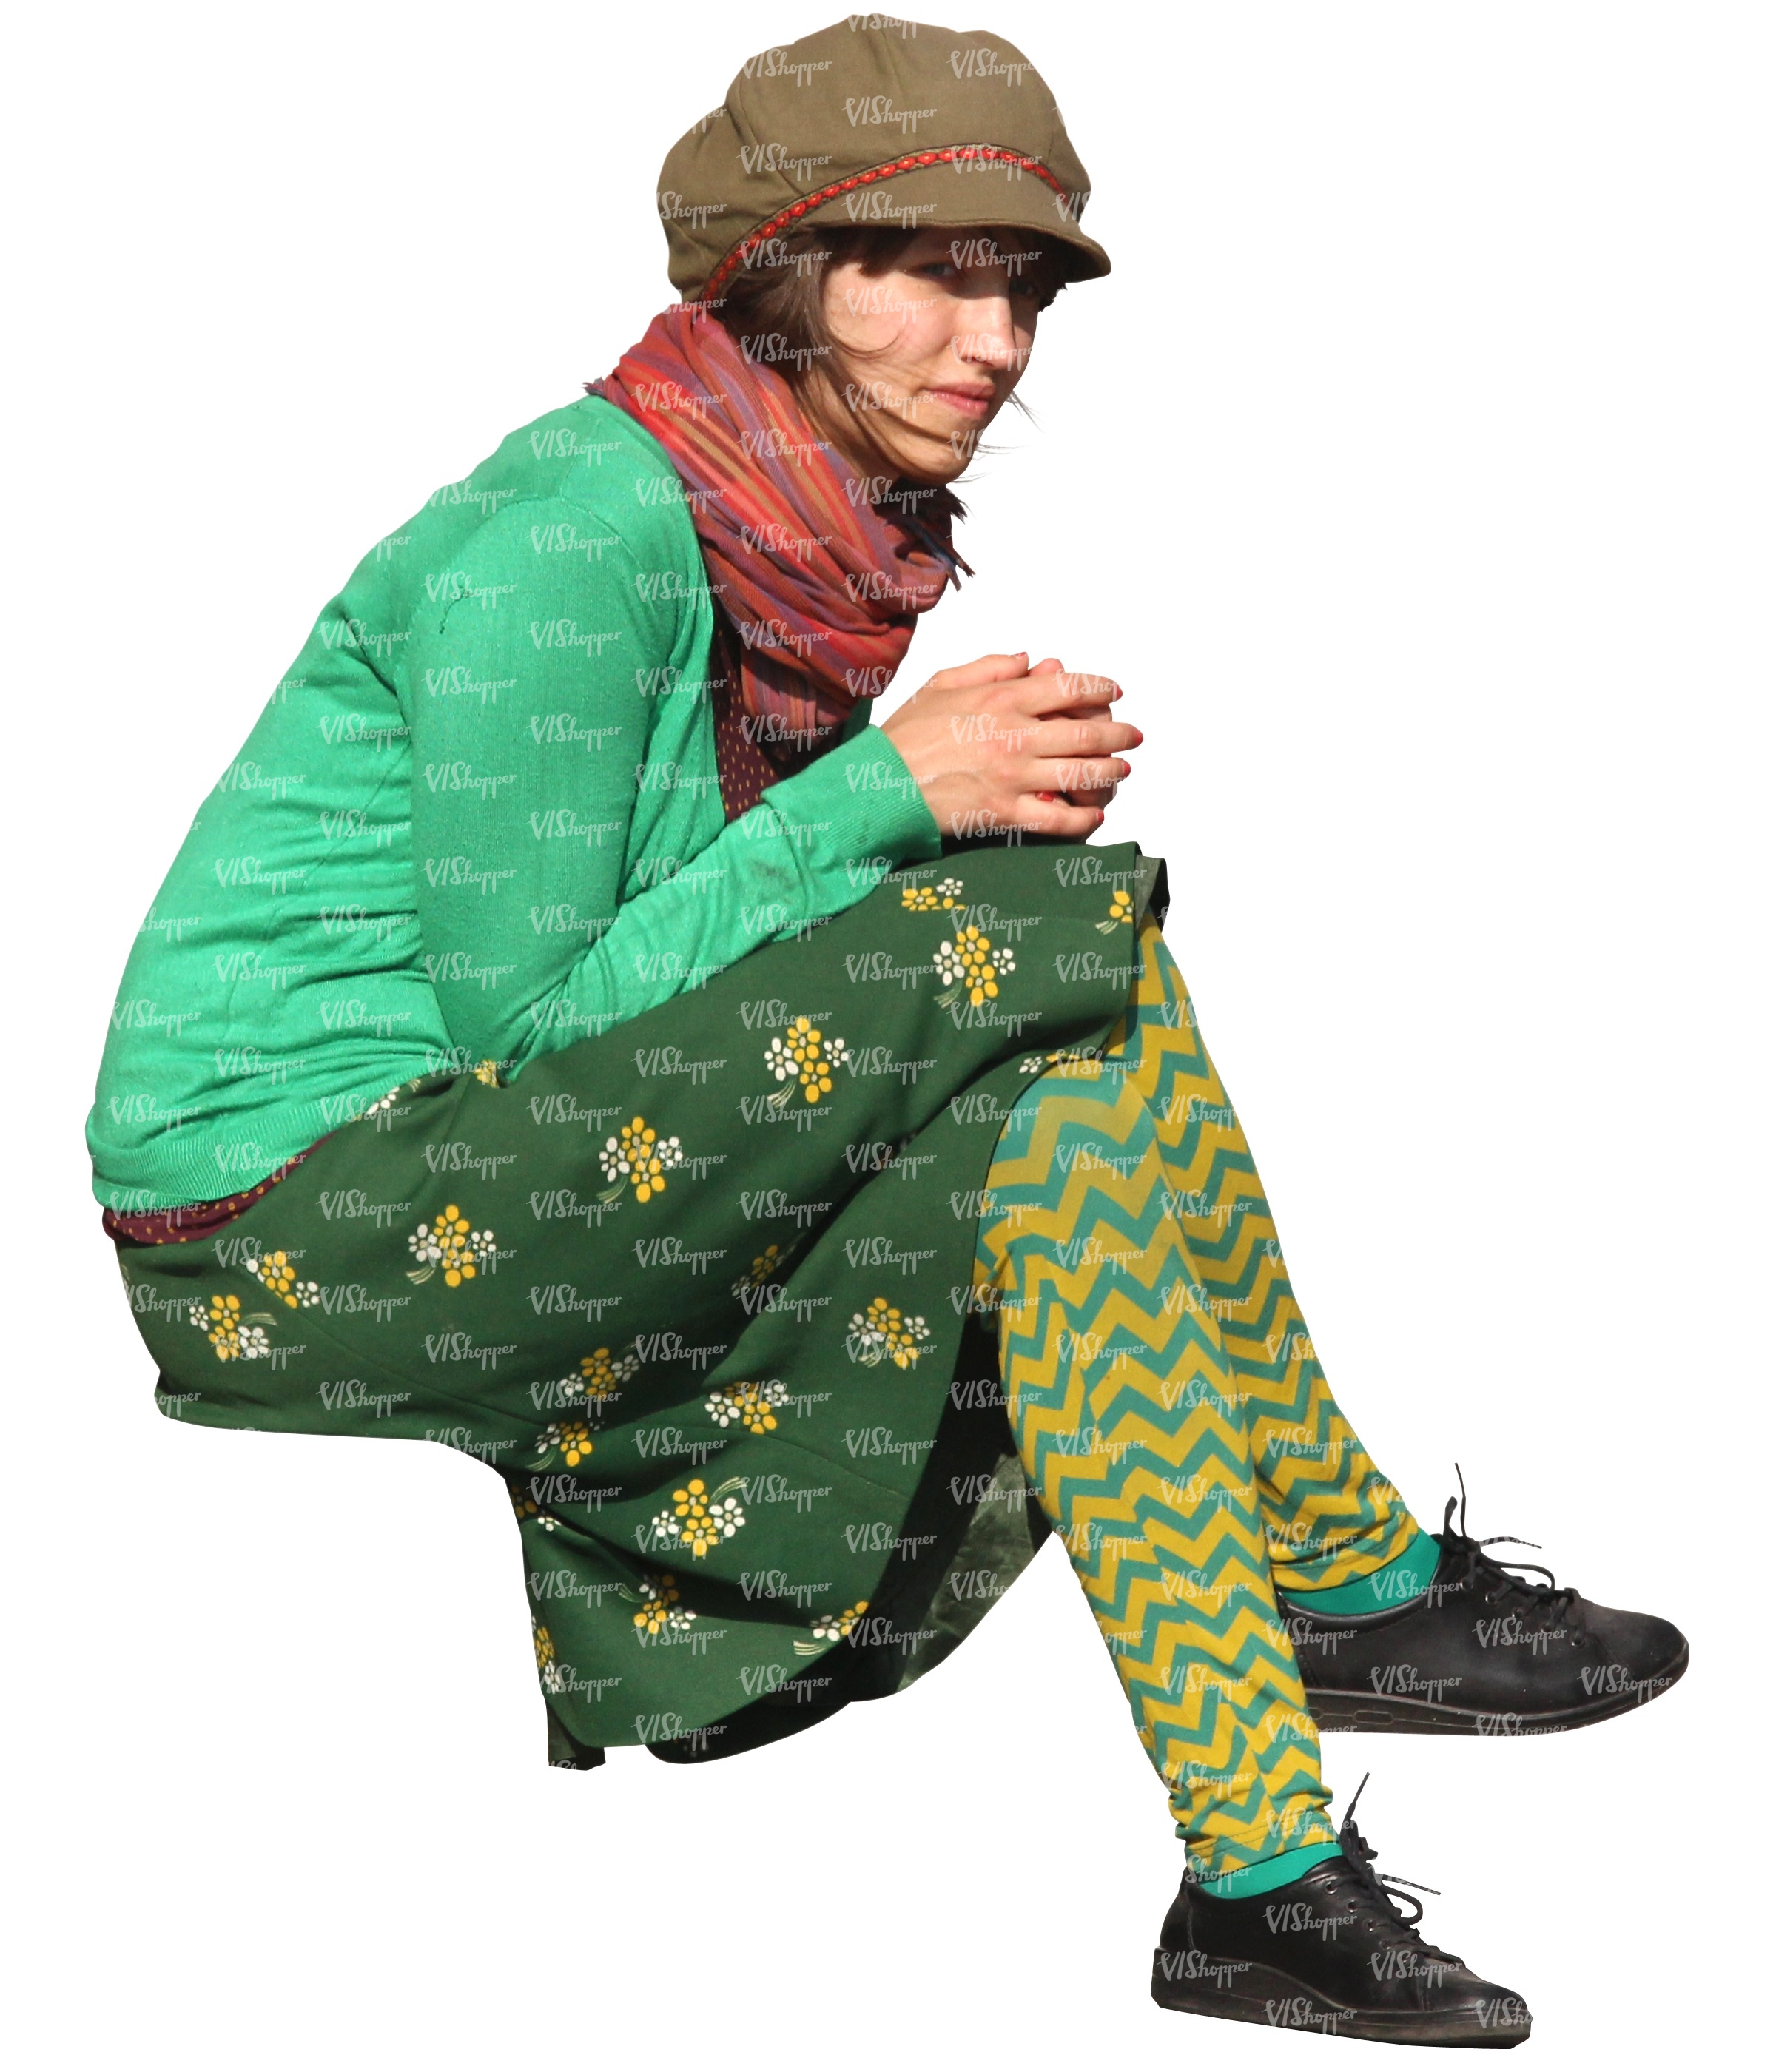 bohemian woman in a green outfit sitting - VIShopper